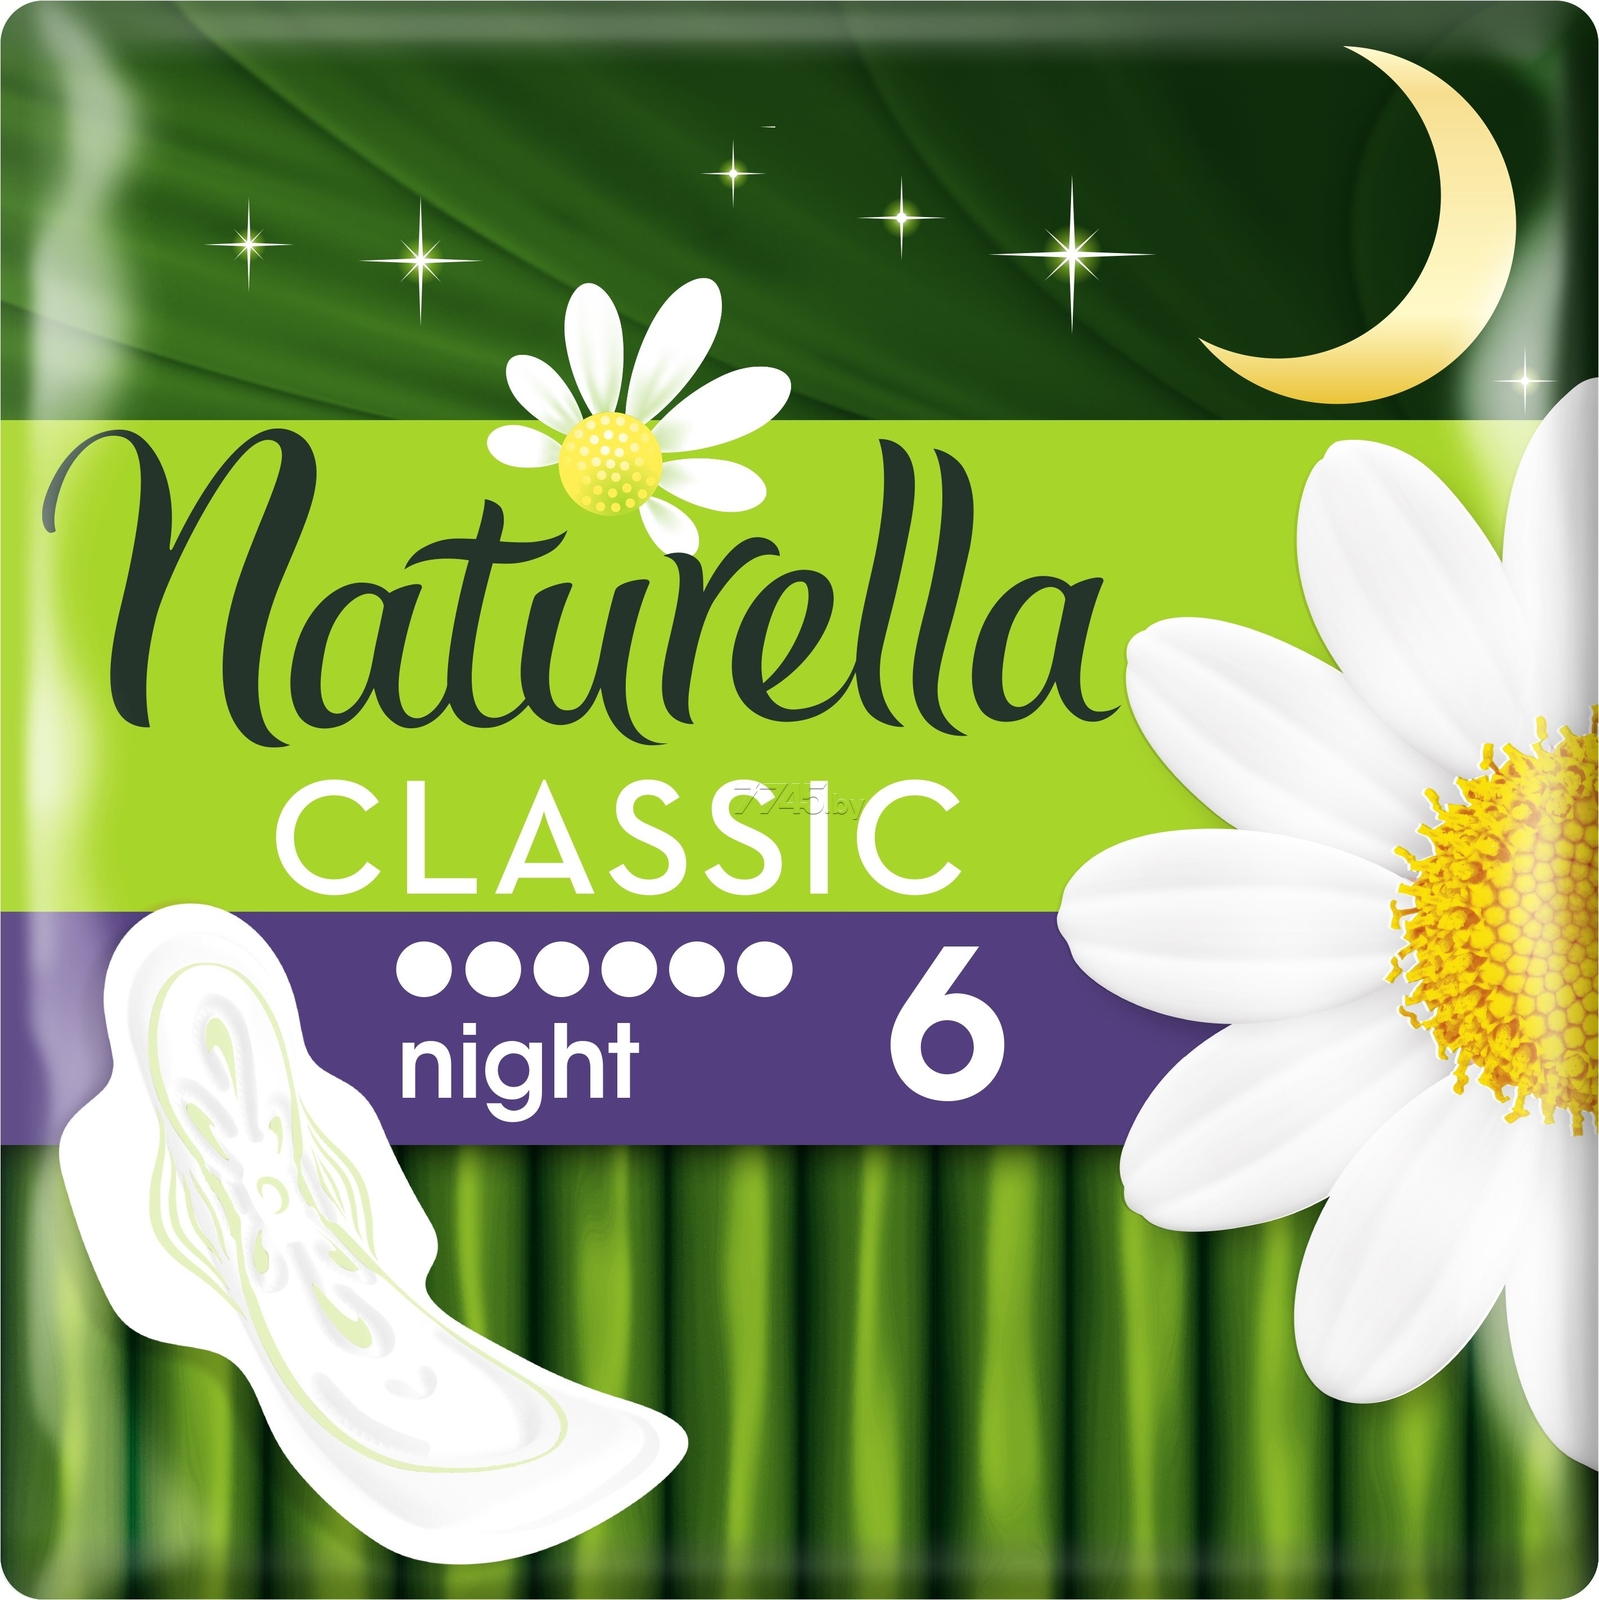 naturella classic camomile night single с крылышками, 6 шт 